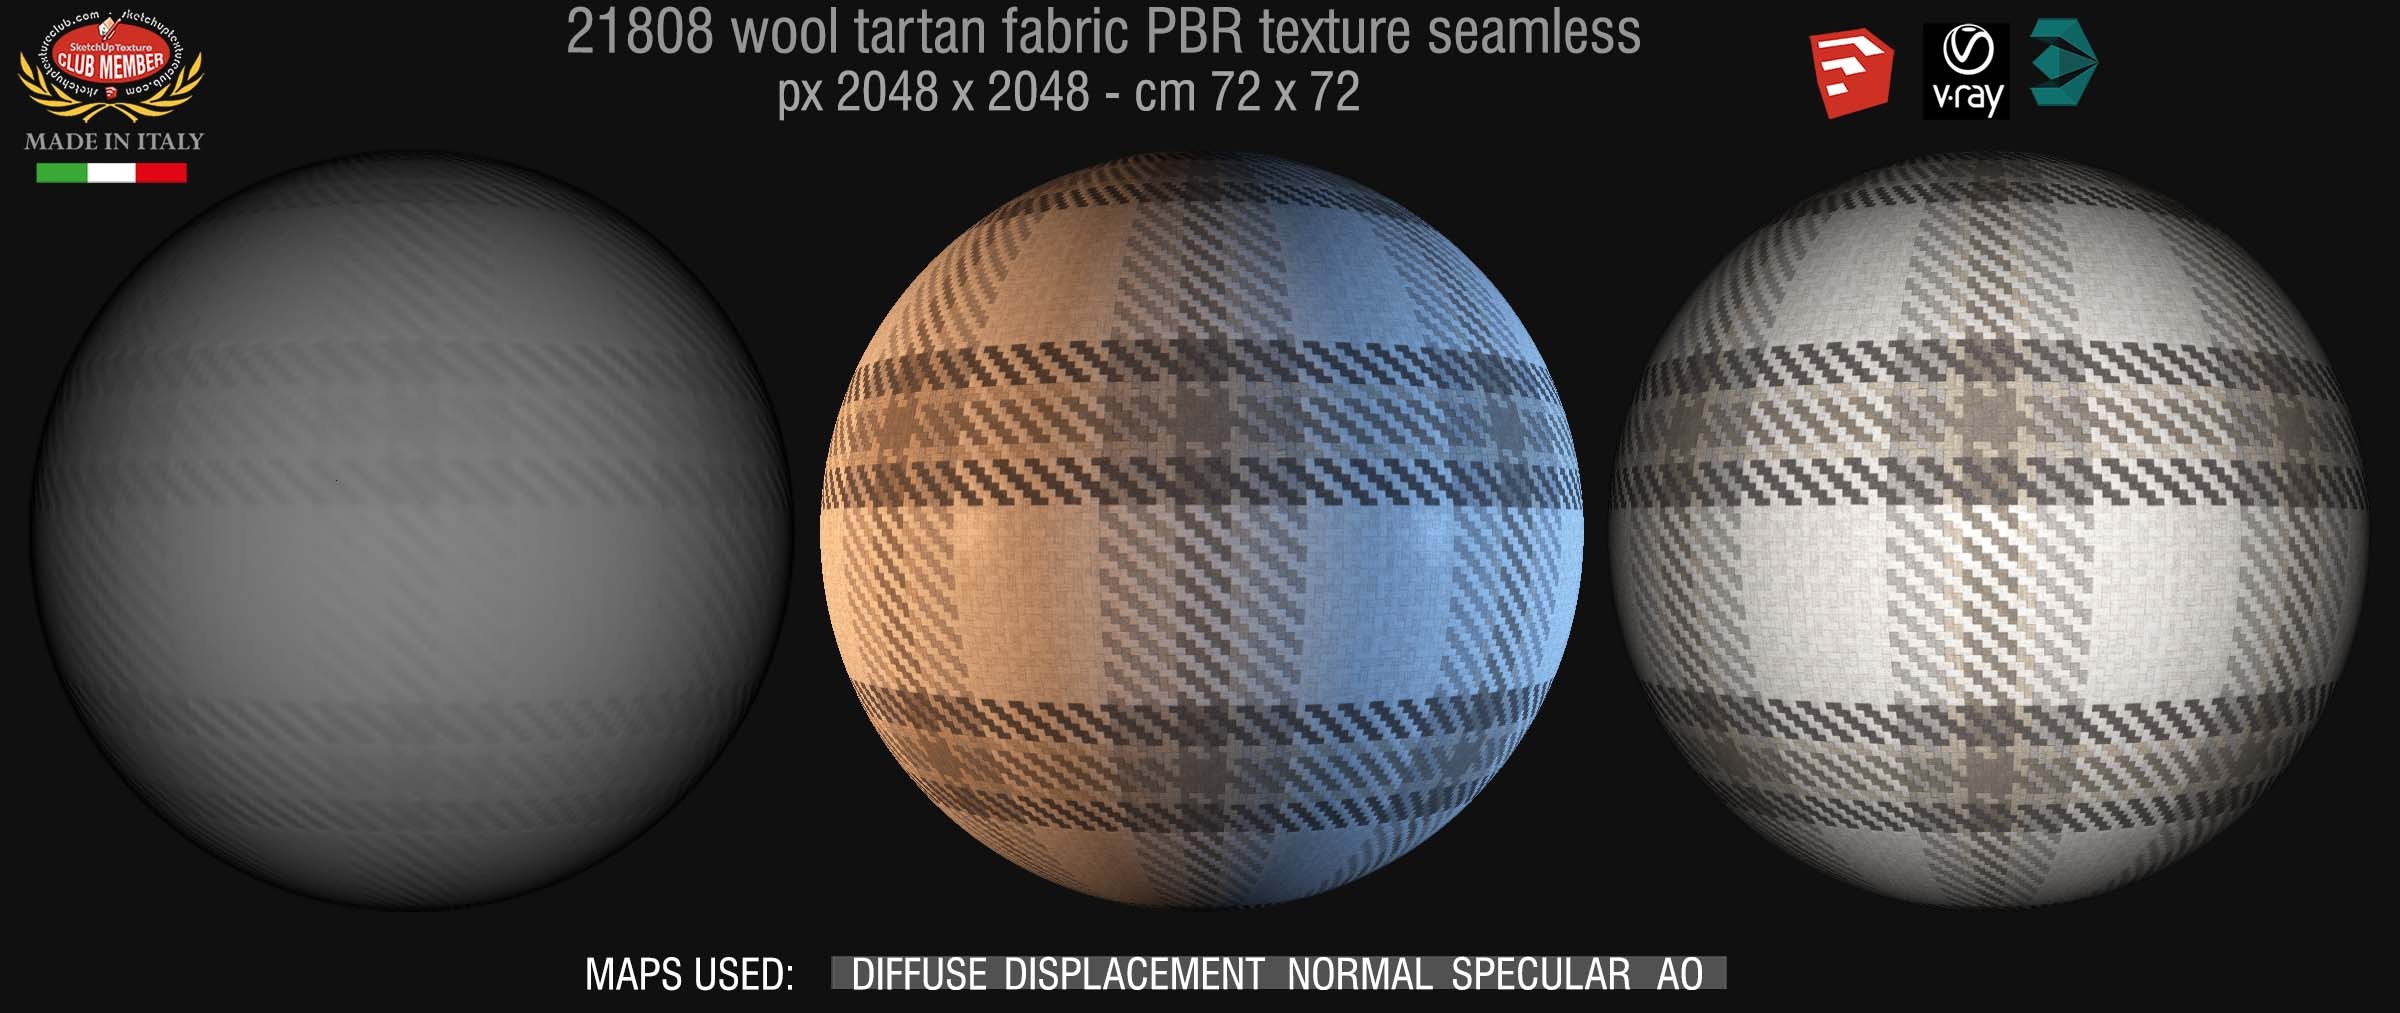 21808 wool tartan fabric PBR texture seamless DEMO